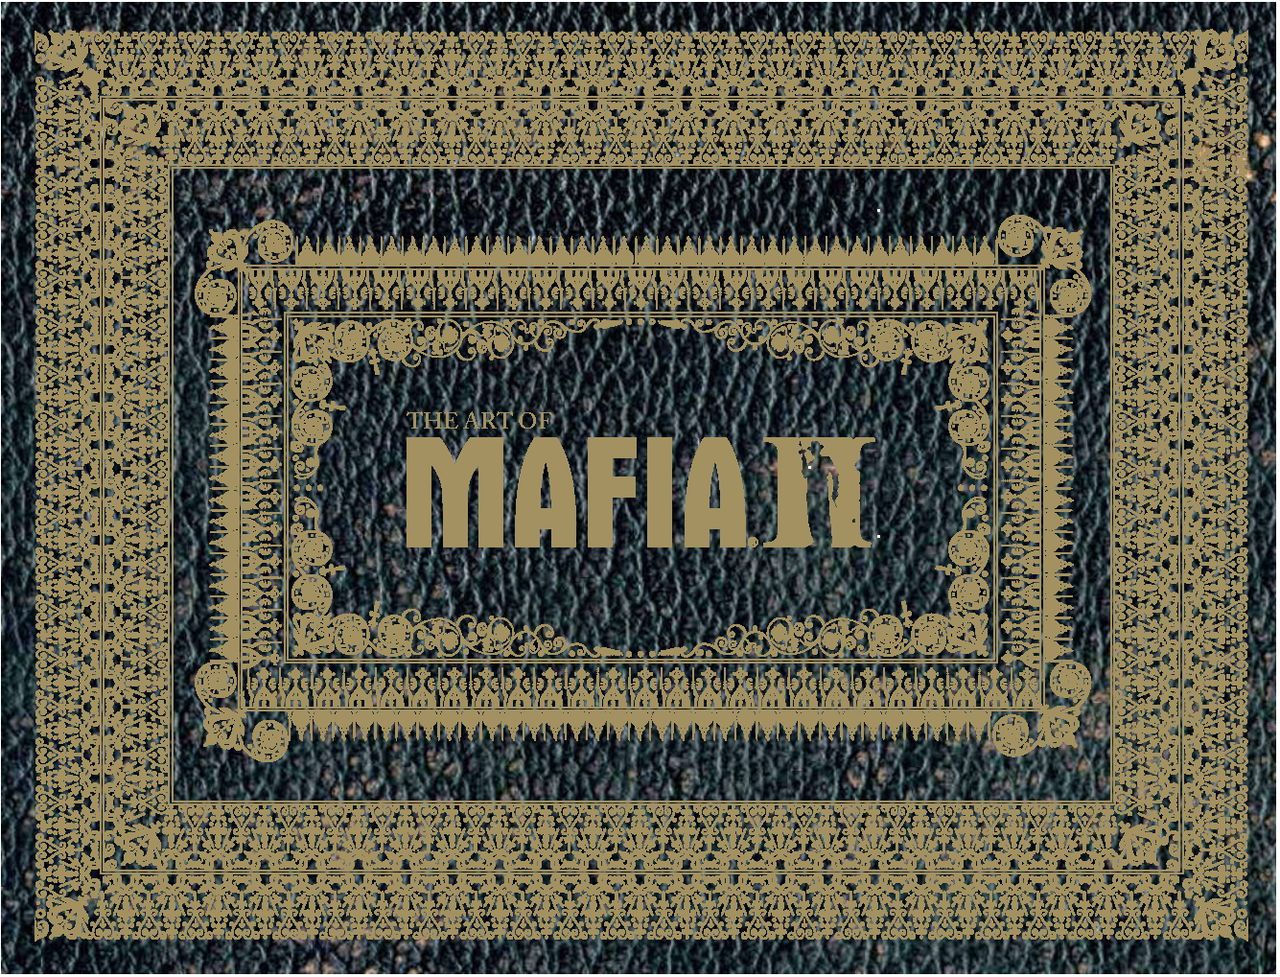 The Art of Mafia II Digital Deluxe Edition 1